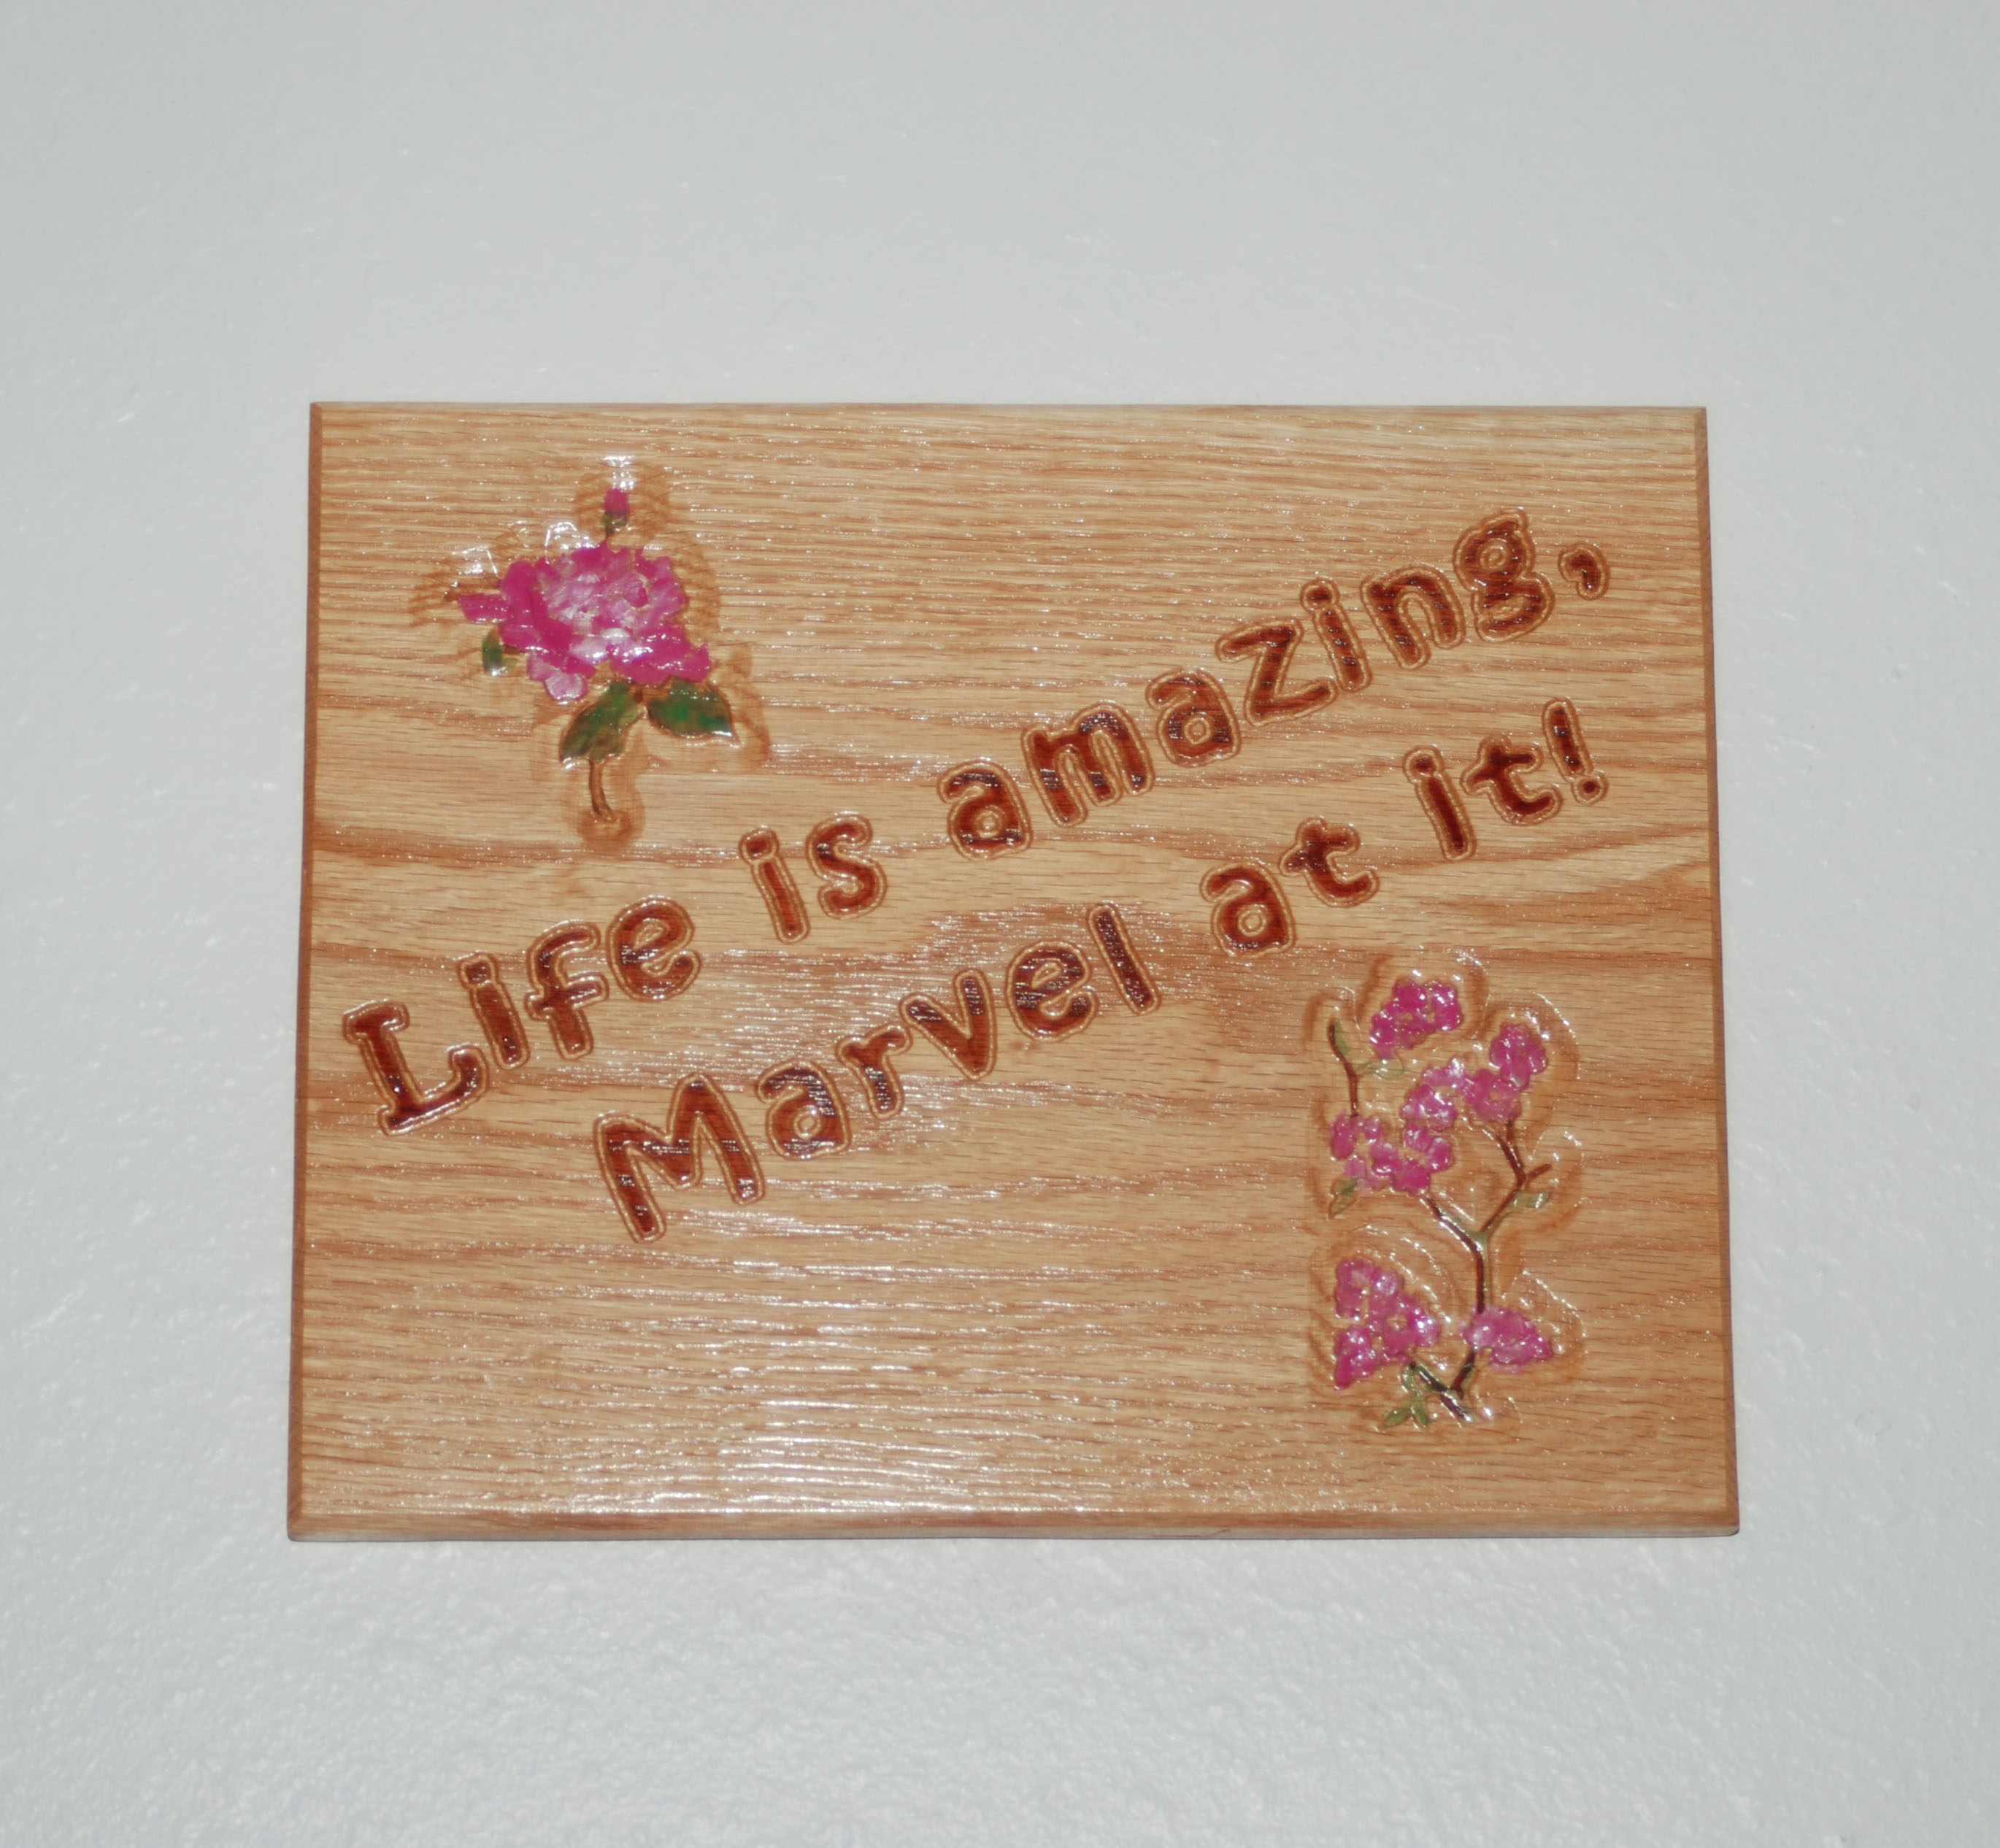 Life is amazing, Marvel in it!